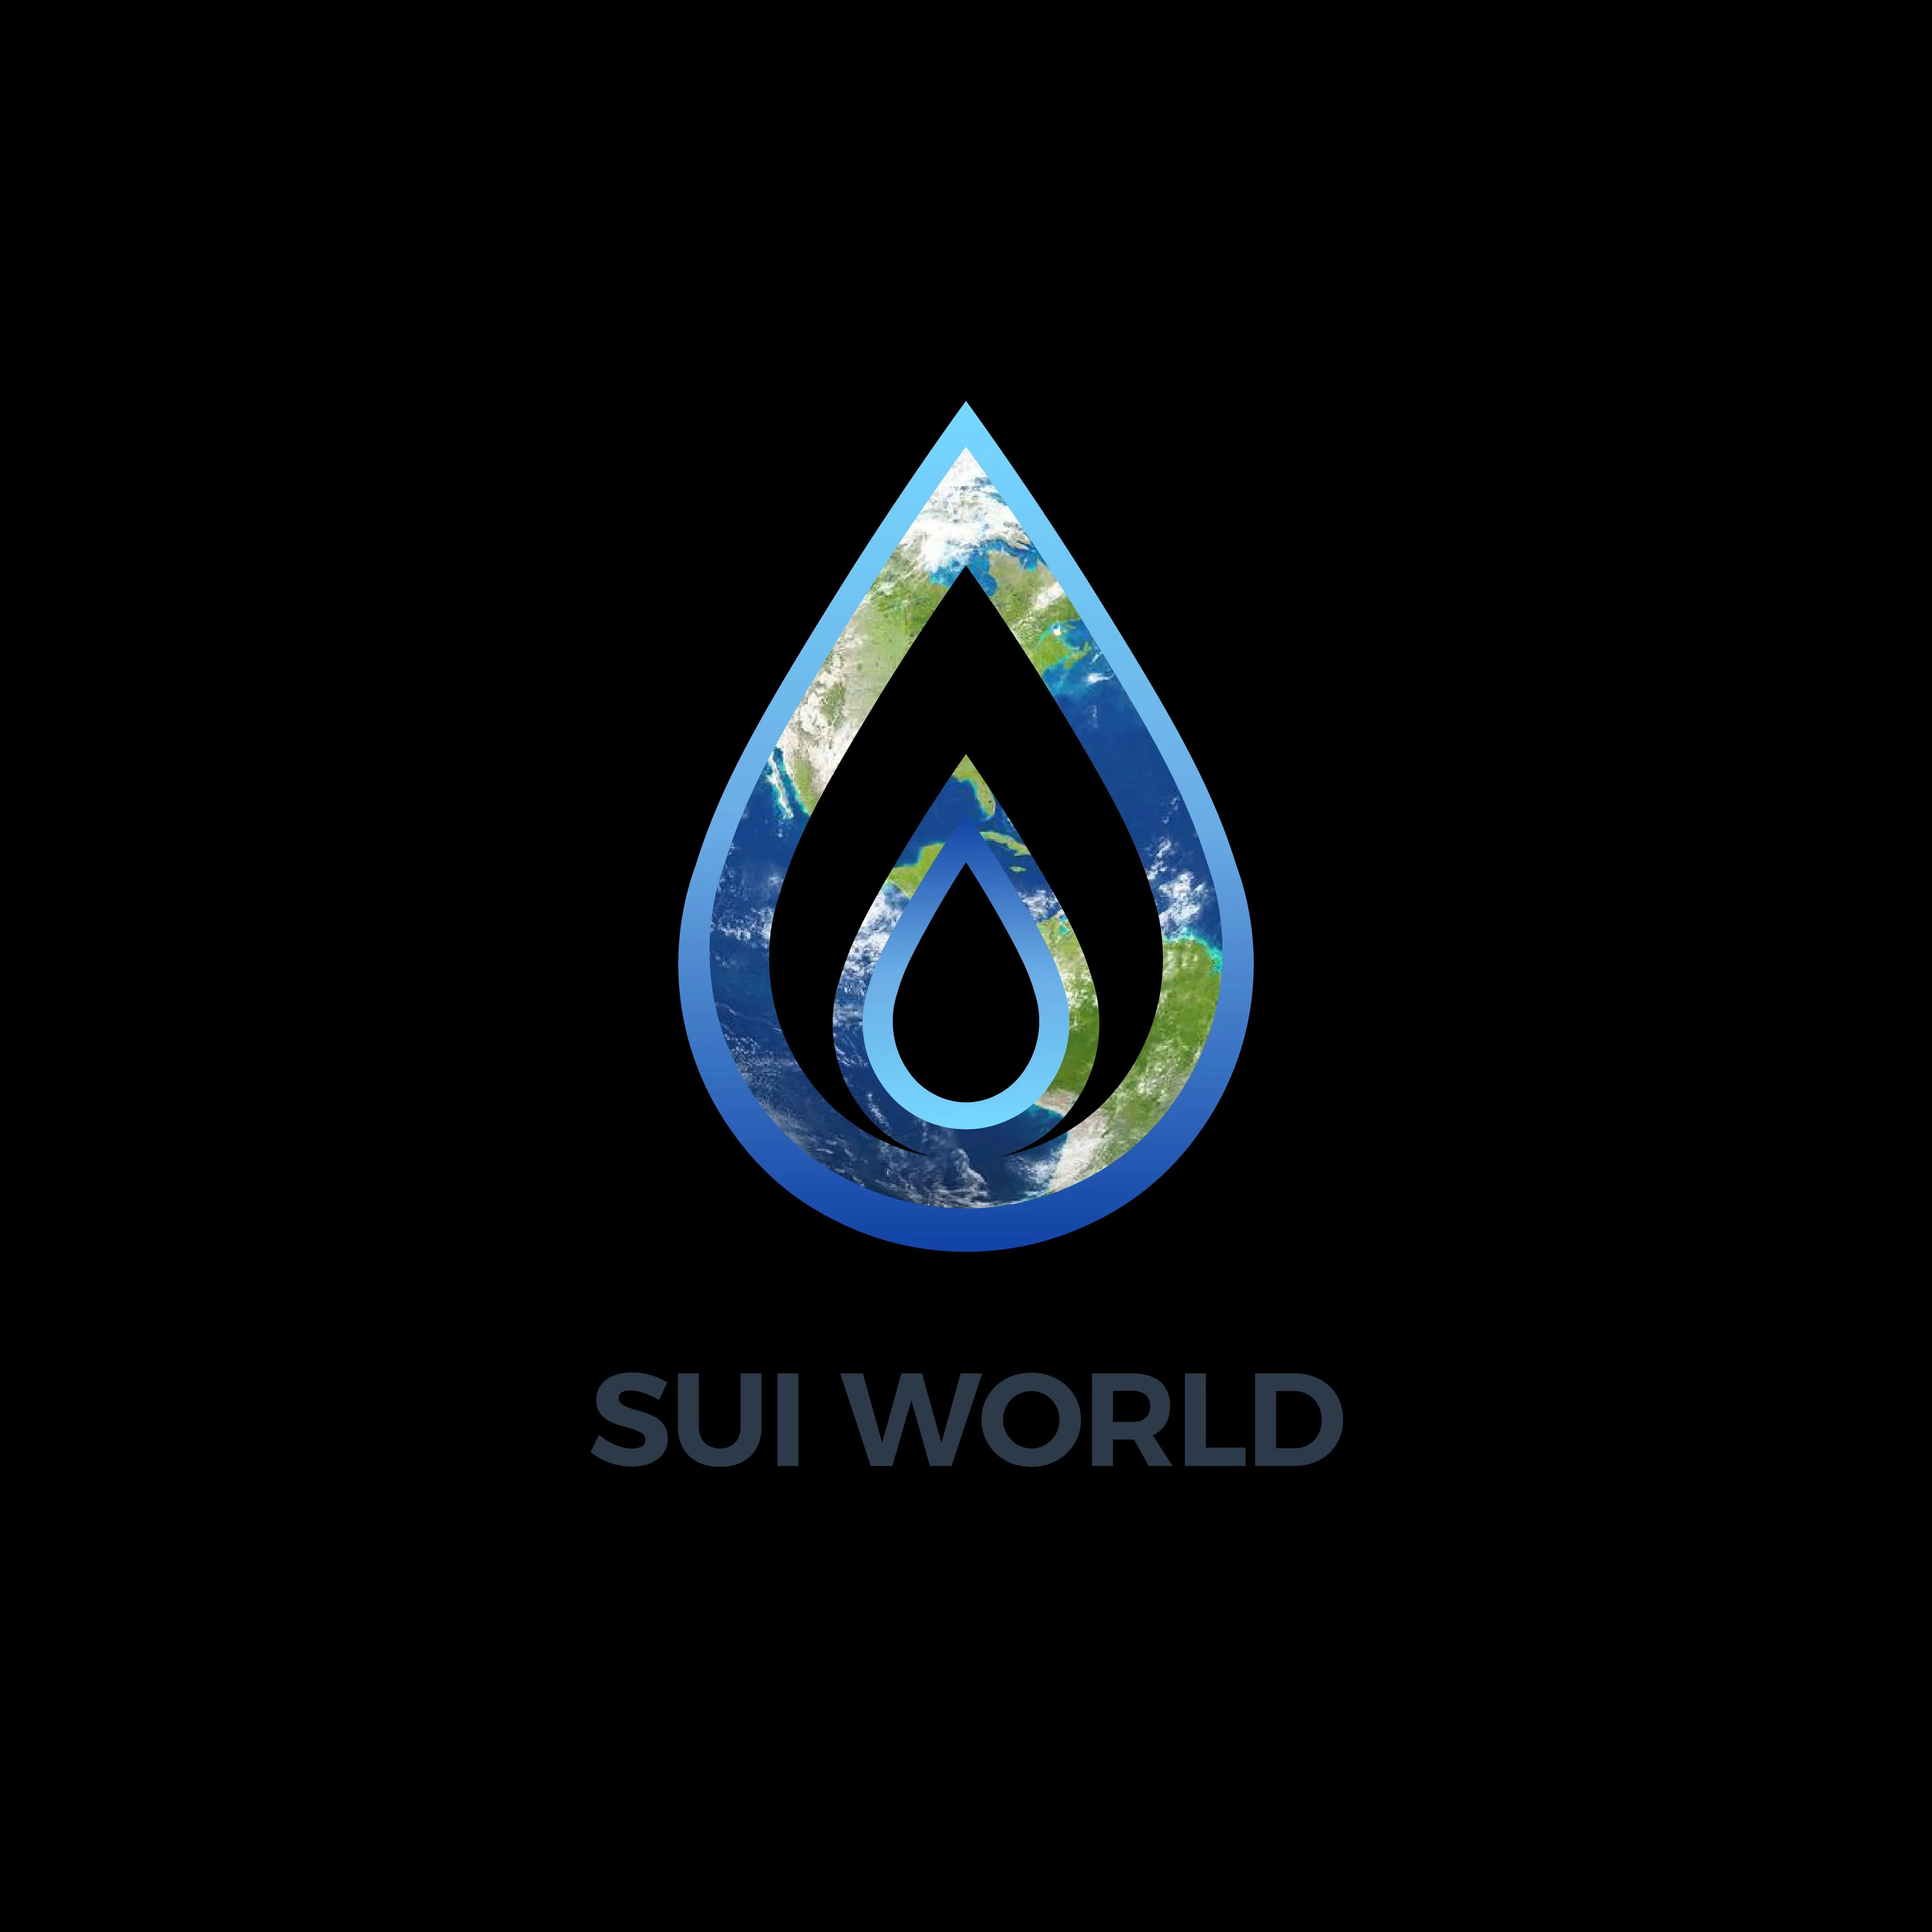 Sui World